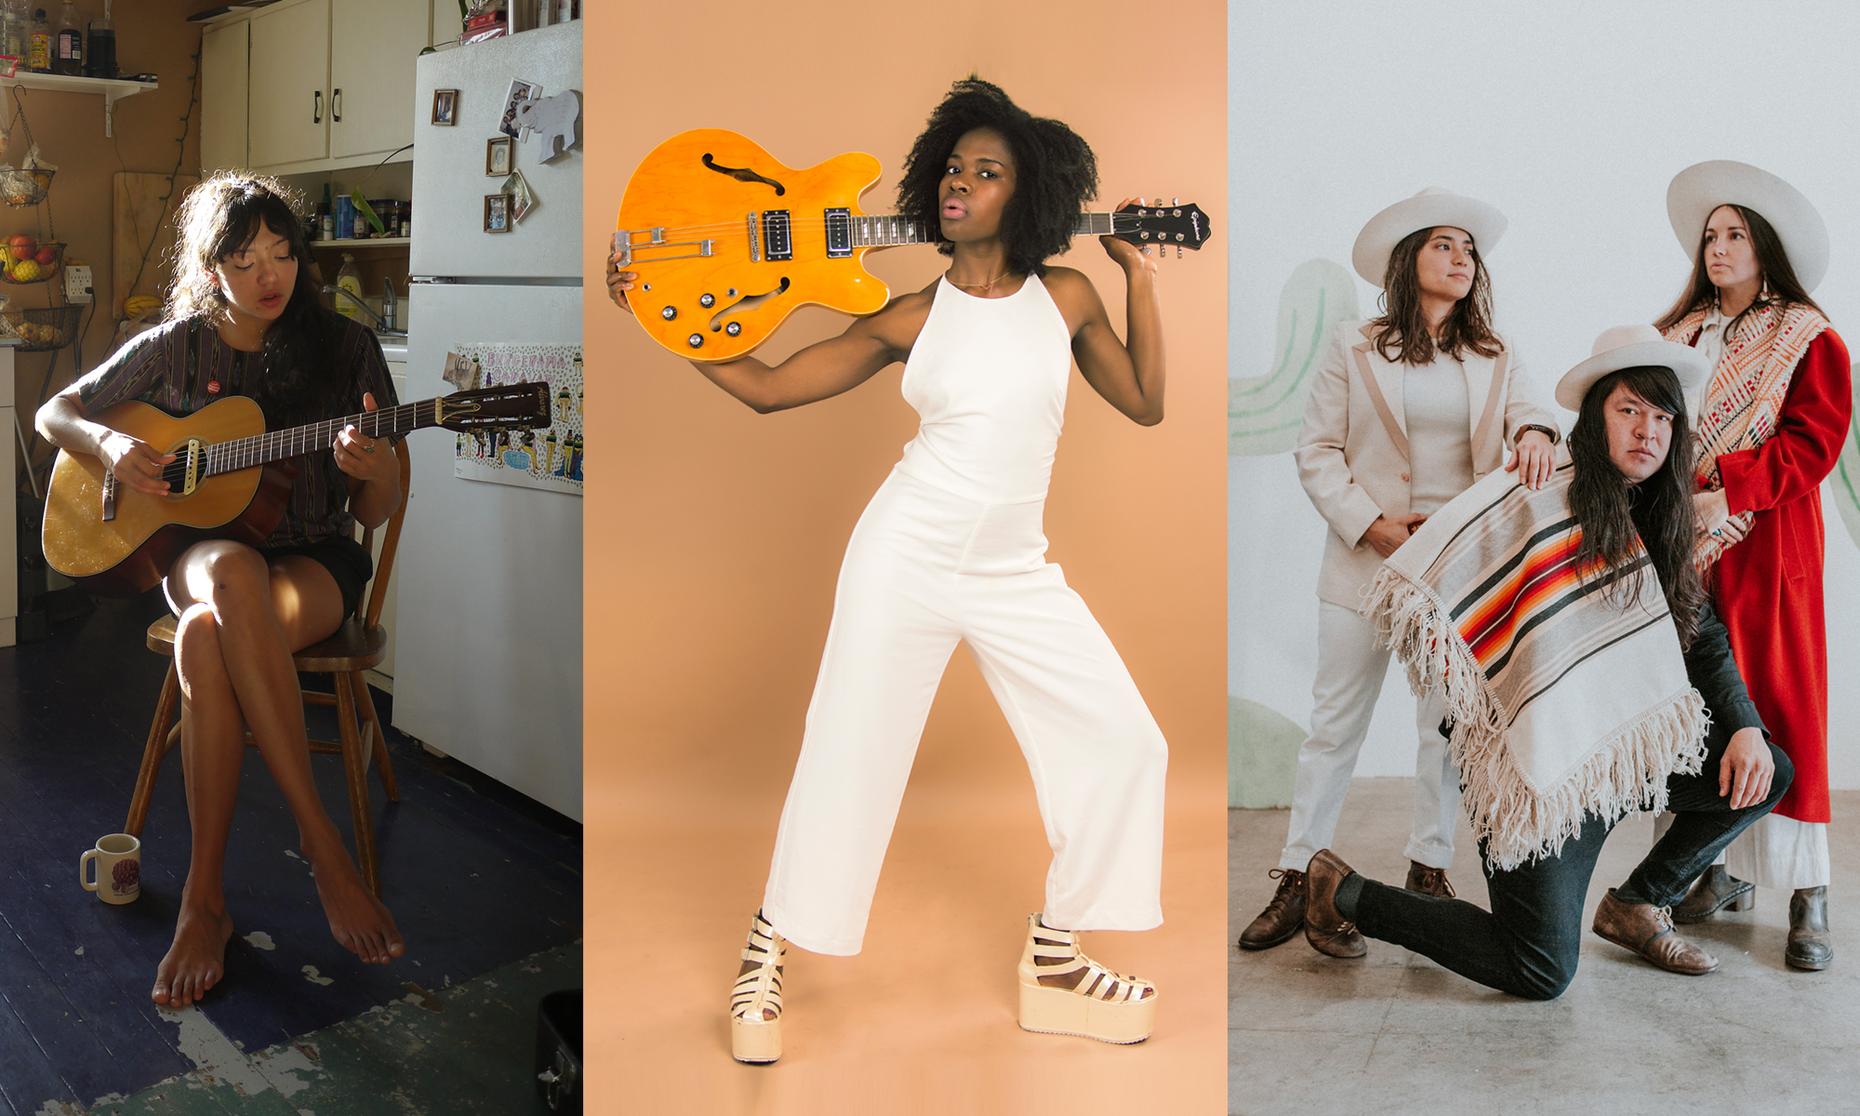 She Shreds: A Celebration of Women Guitarists